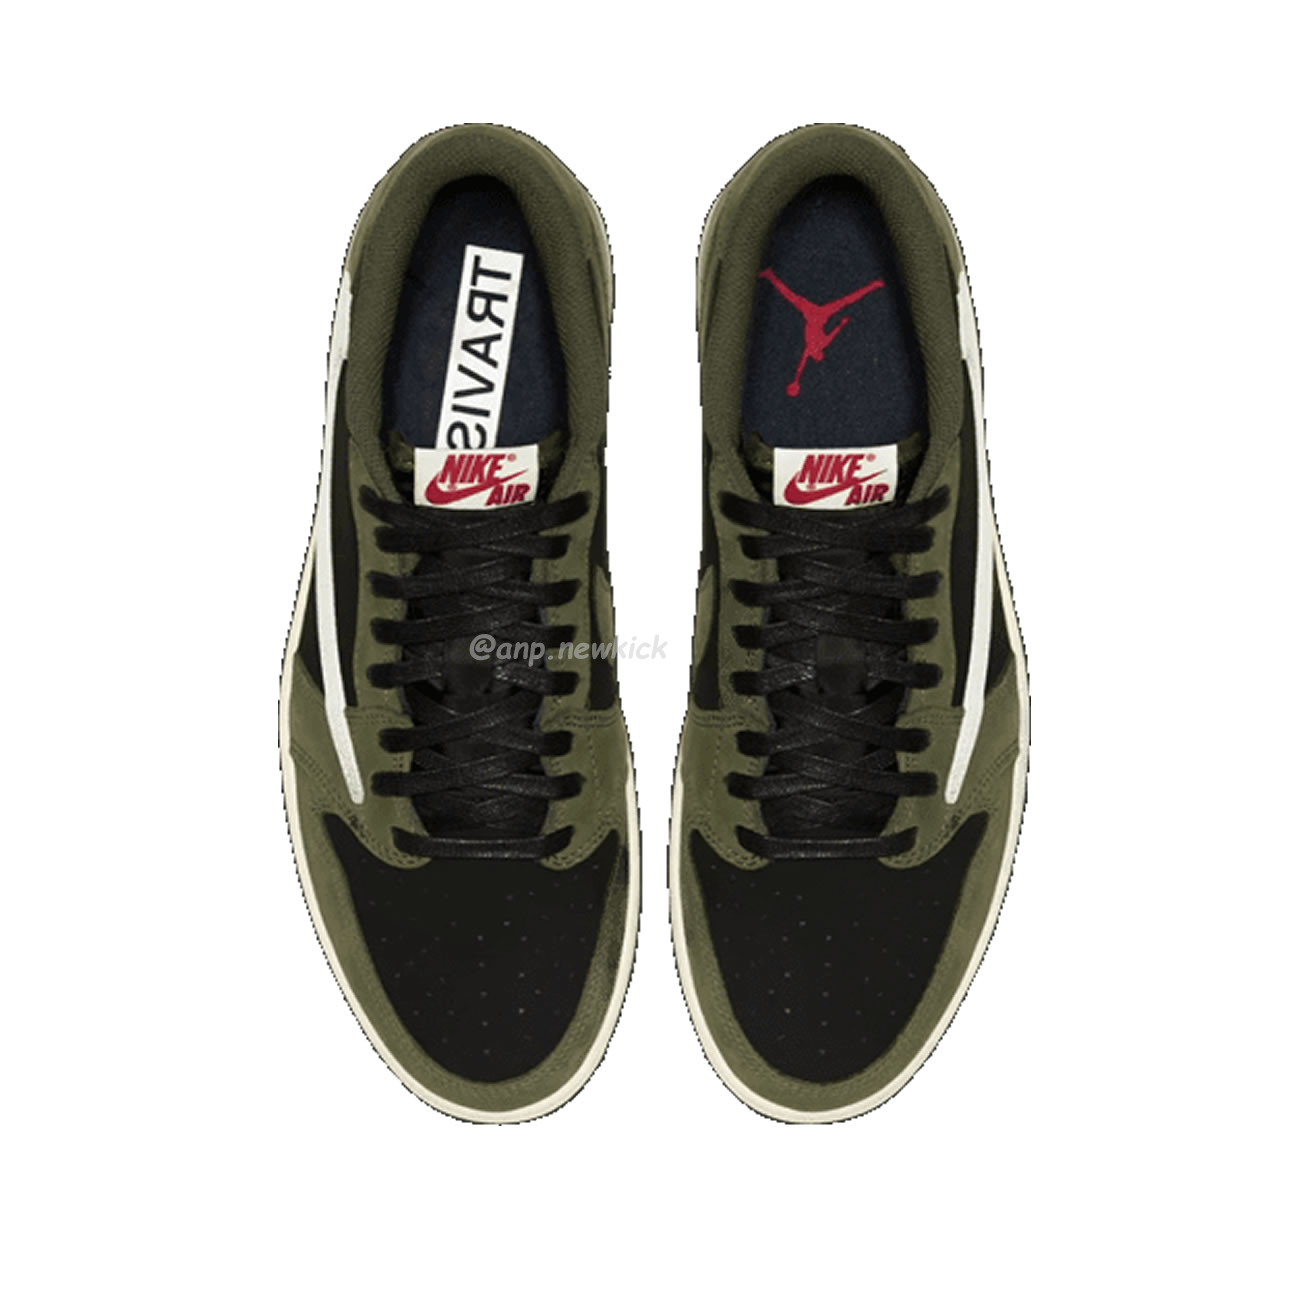 Travis Scott X Nike Air Jordan 1 Retro Low Og Sp Black Olive Dm7866 002 (5) - newkick.org